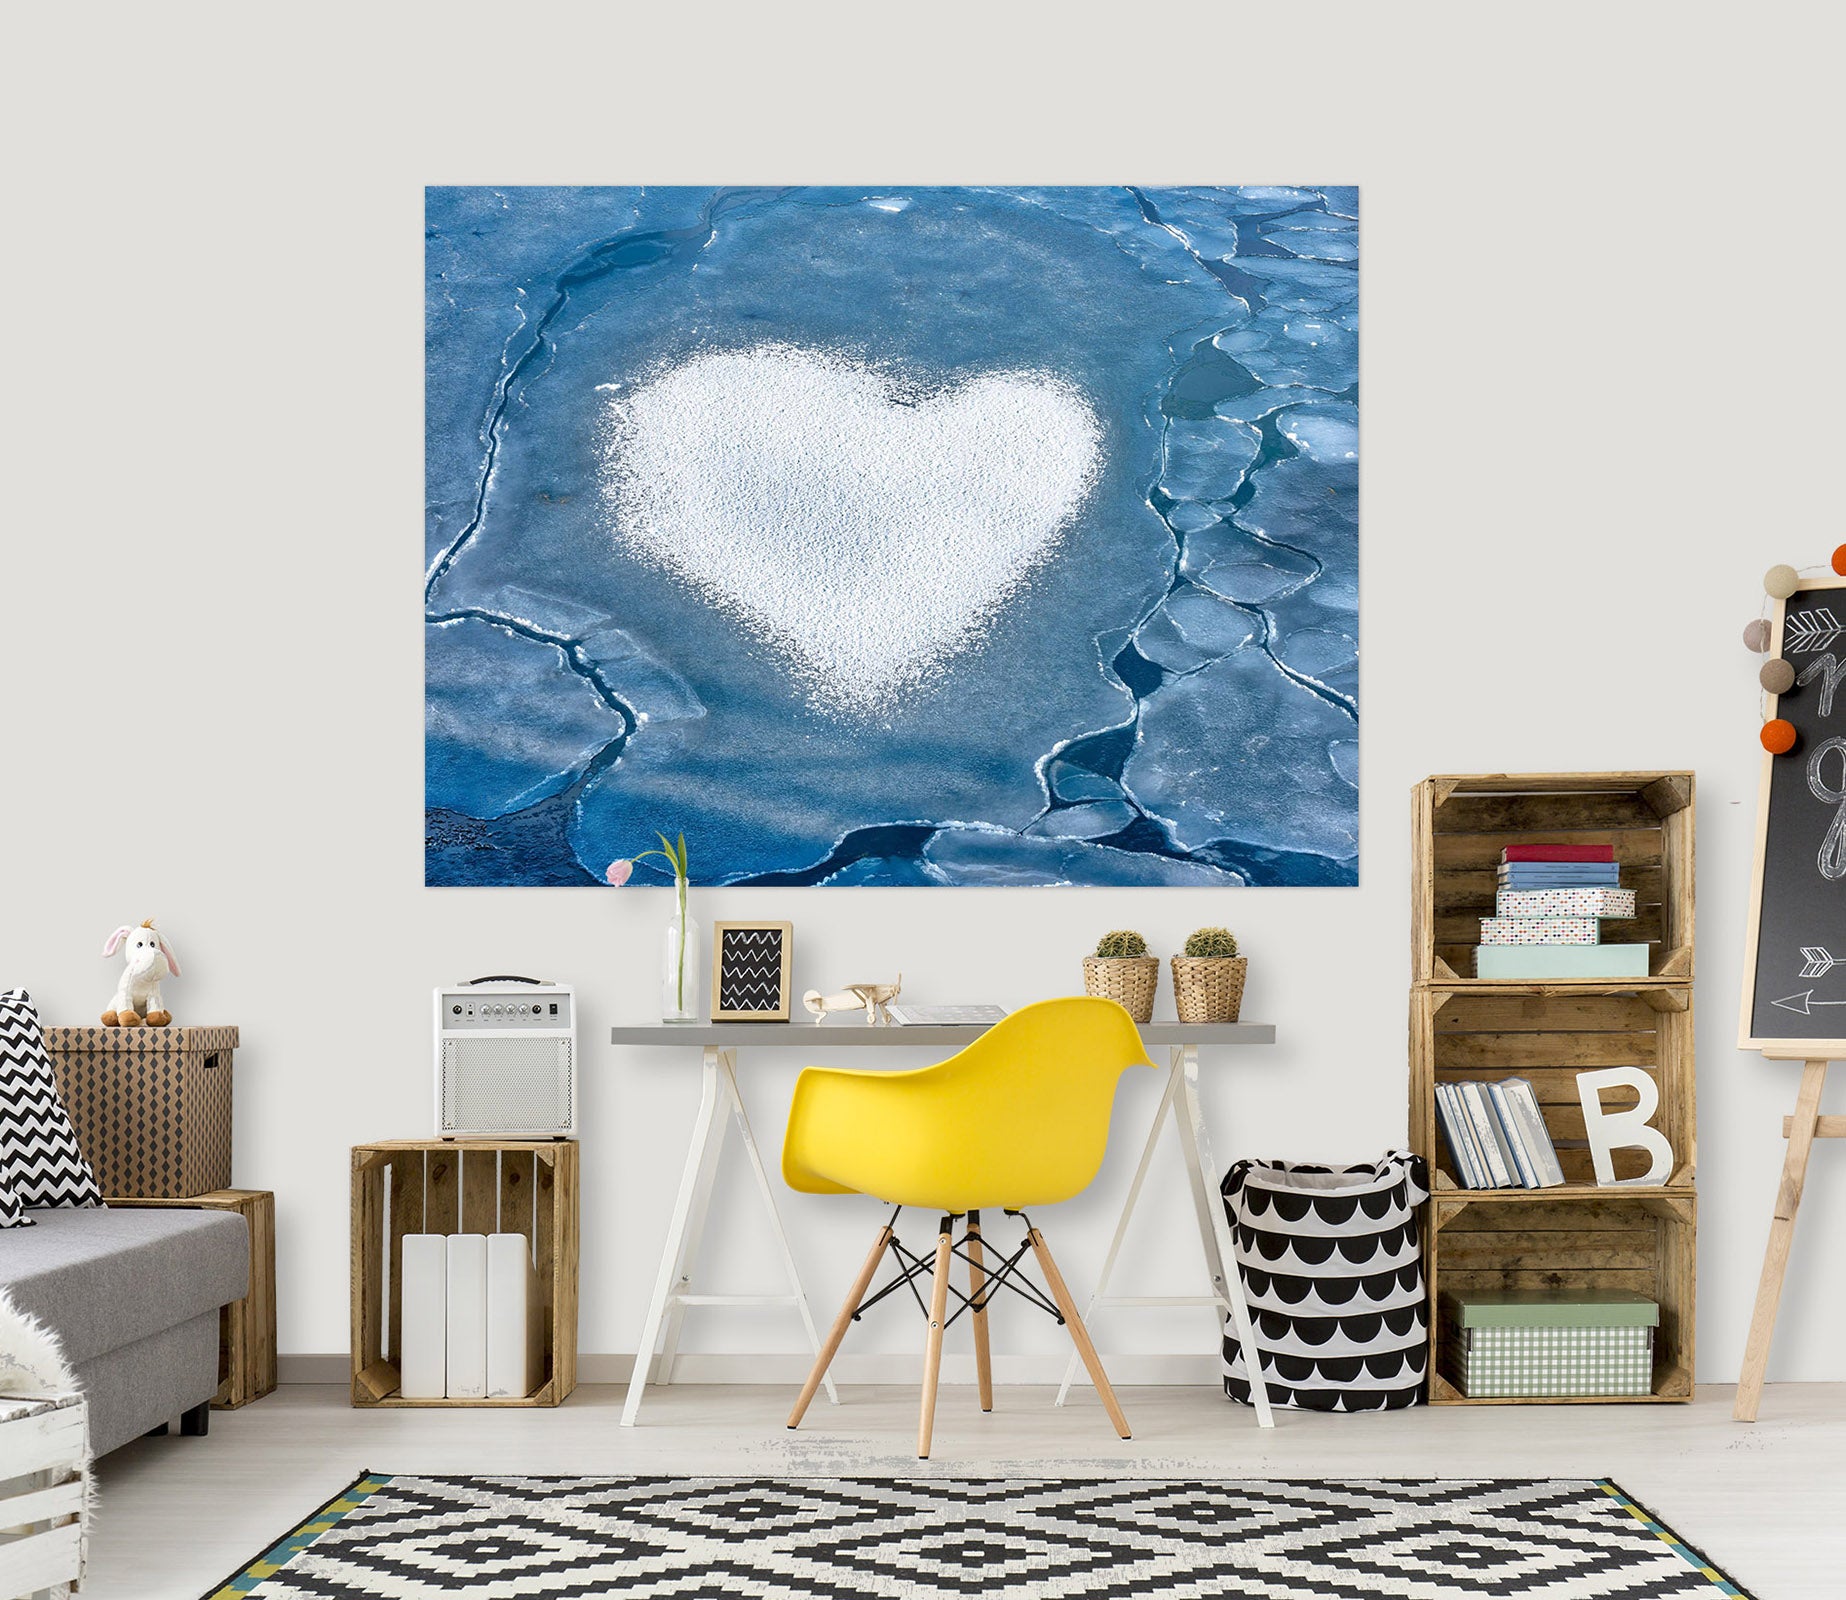 3D Heart Of Ice 176 Marco Carmassi Wall Sticker